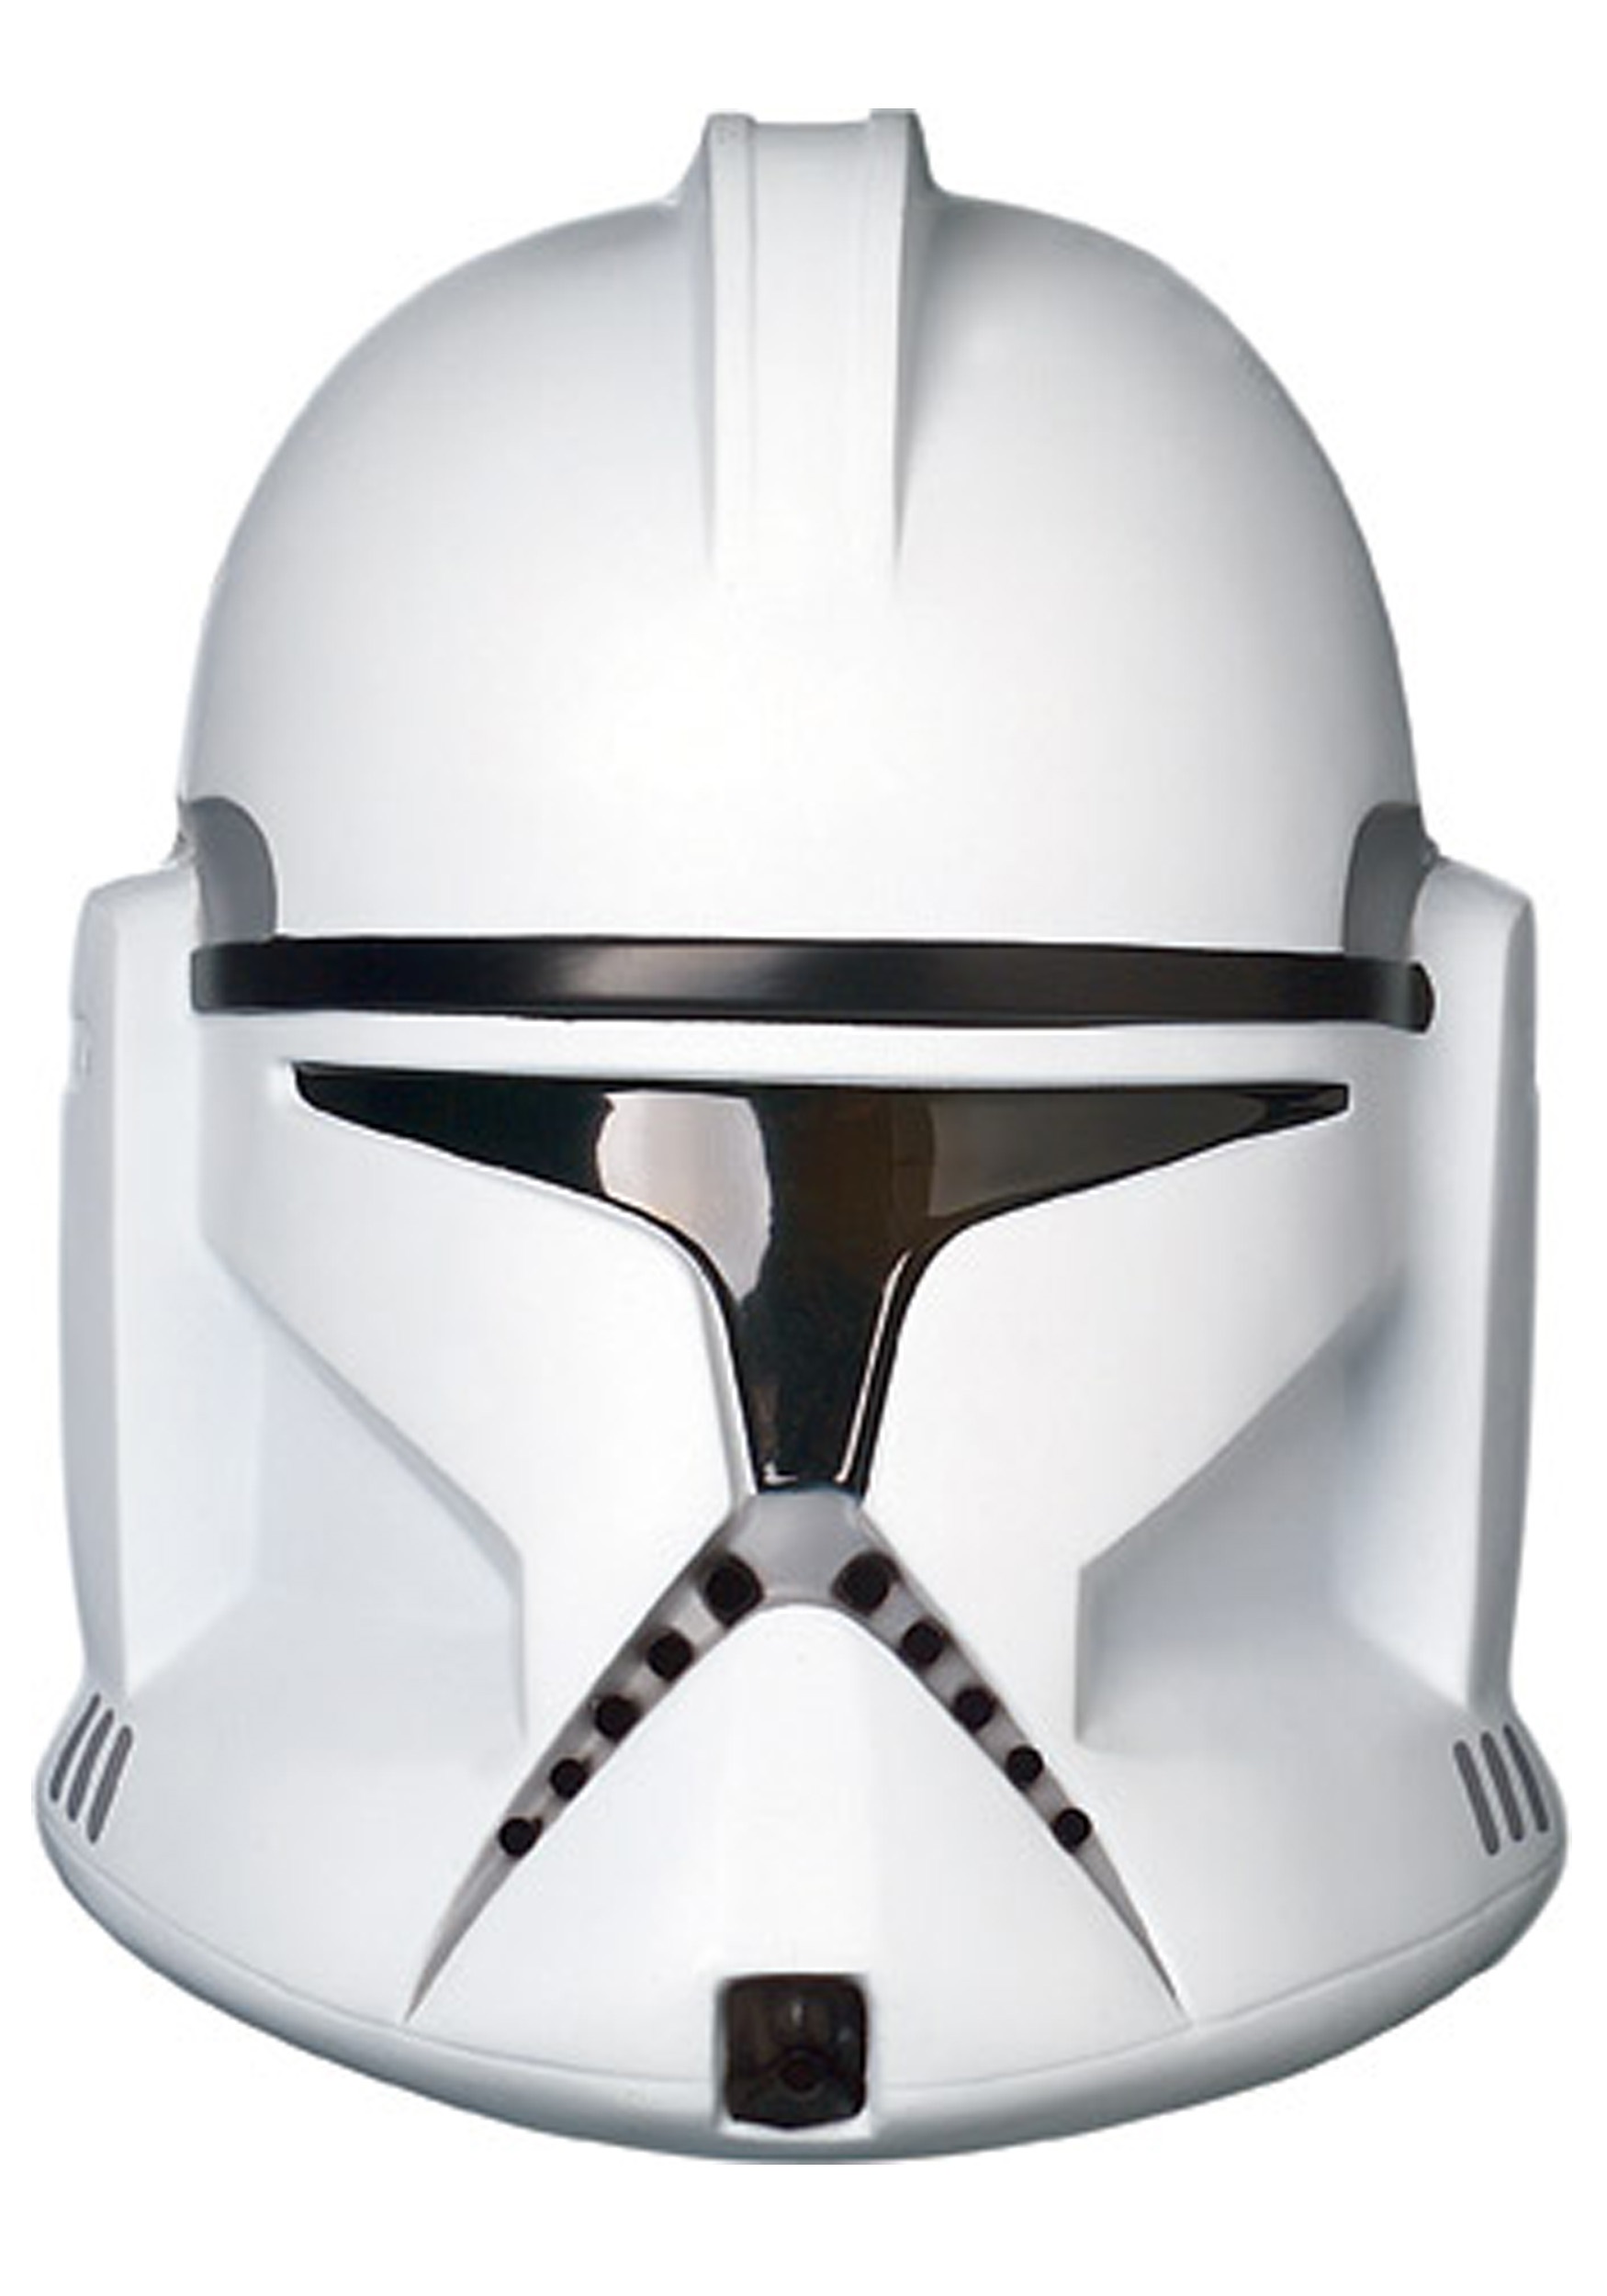 9 Best Images of Trooper Star Wars Printable Mask - Stormtrooper Star ...